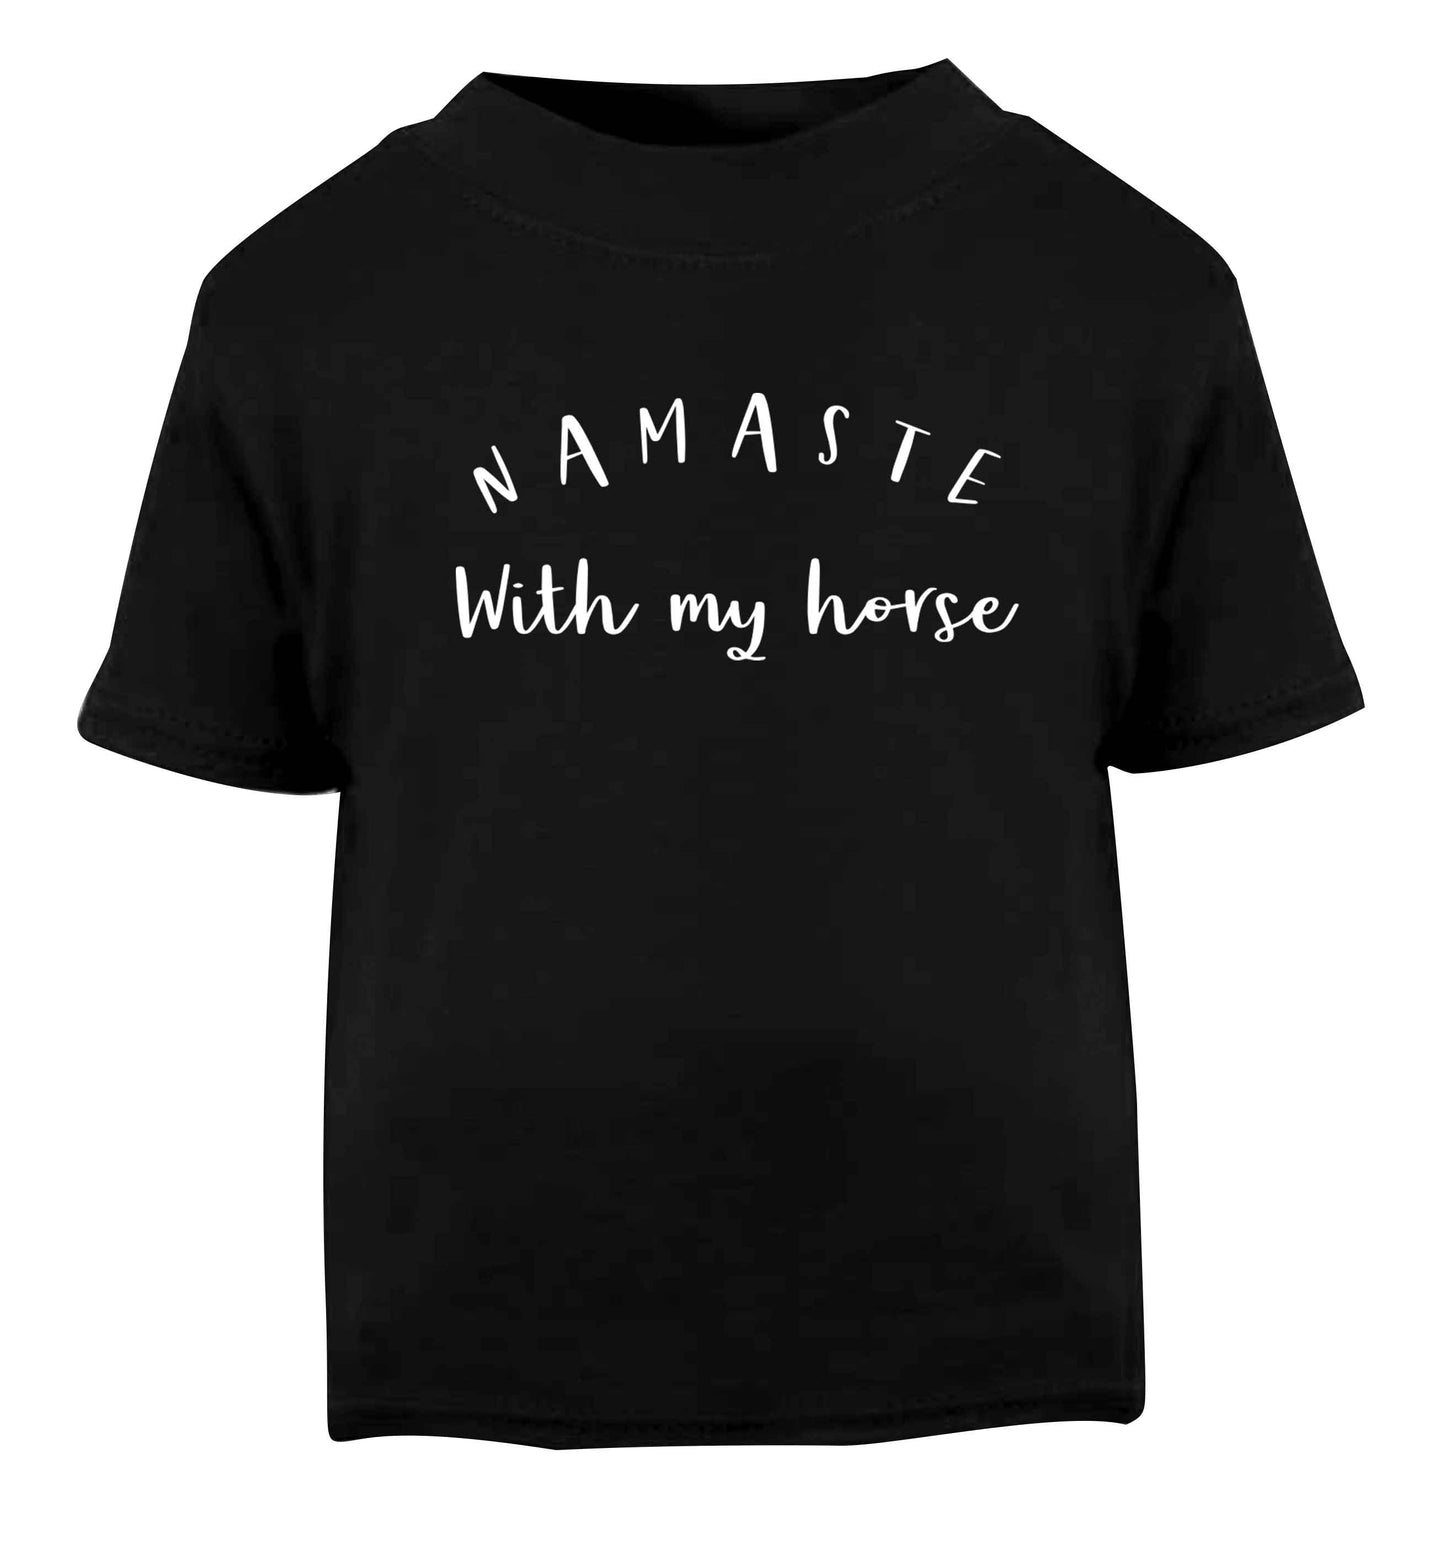 Namaste with my horse Black baby toddler Tshirt 2 years